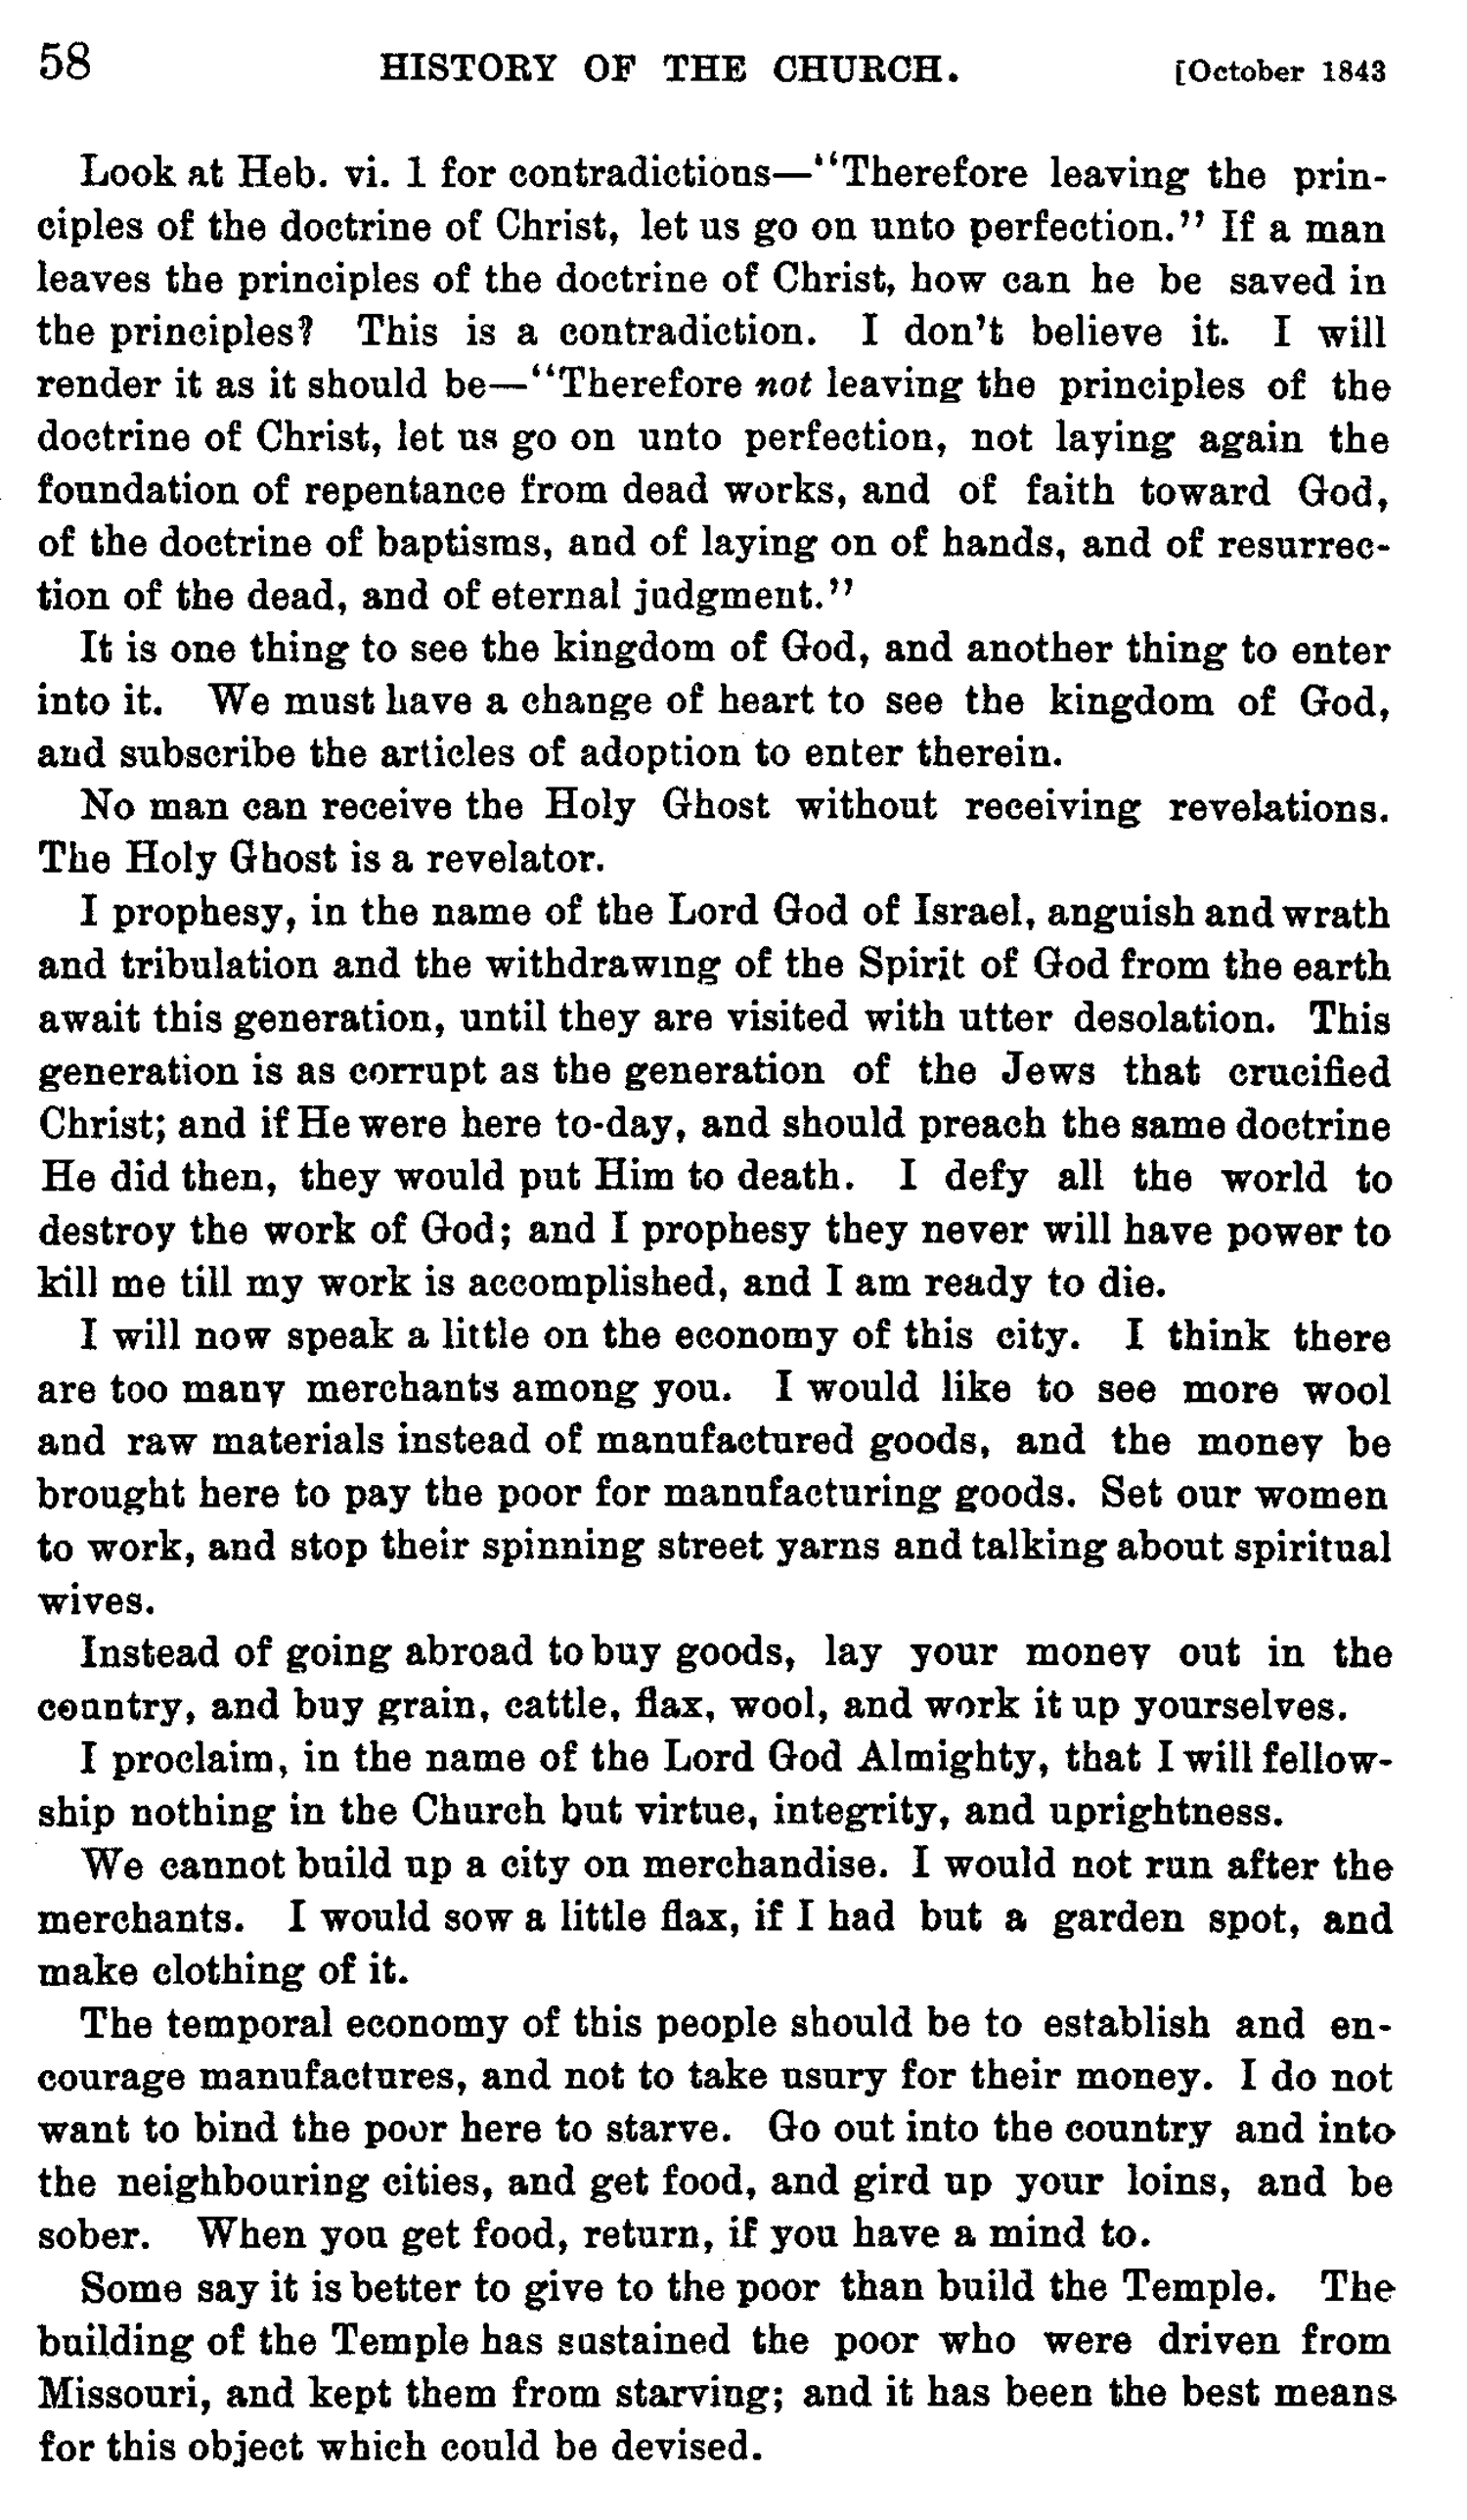 History of the Church, vol. 6, p. 58